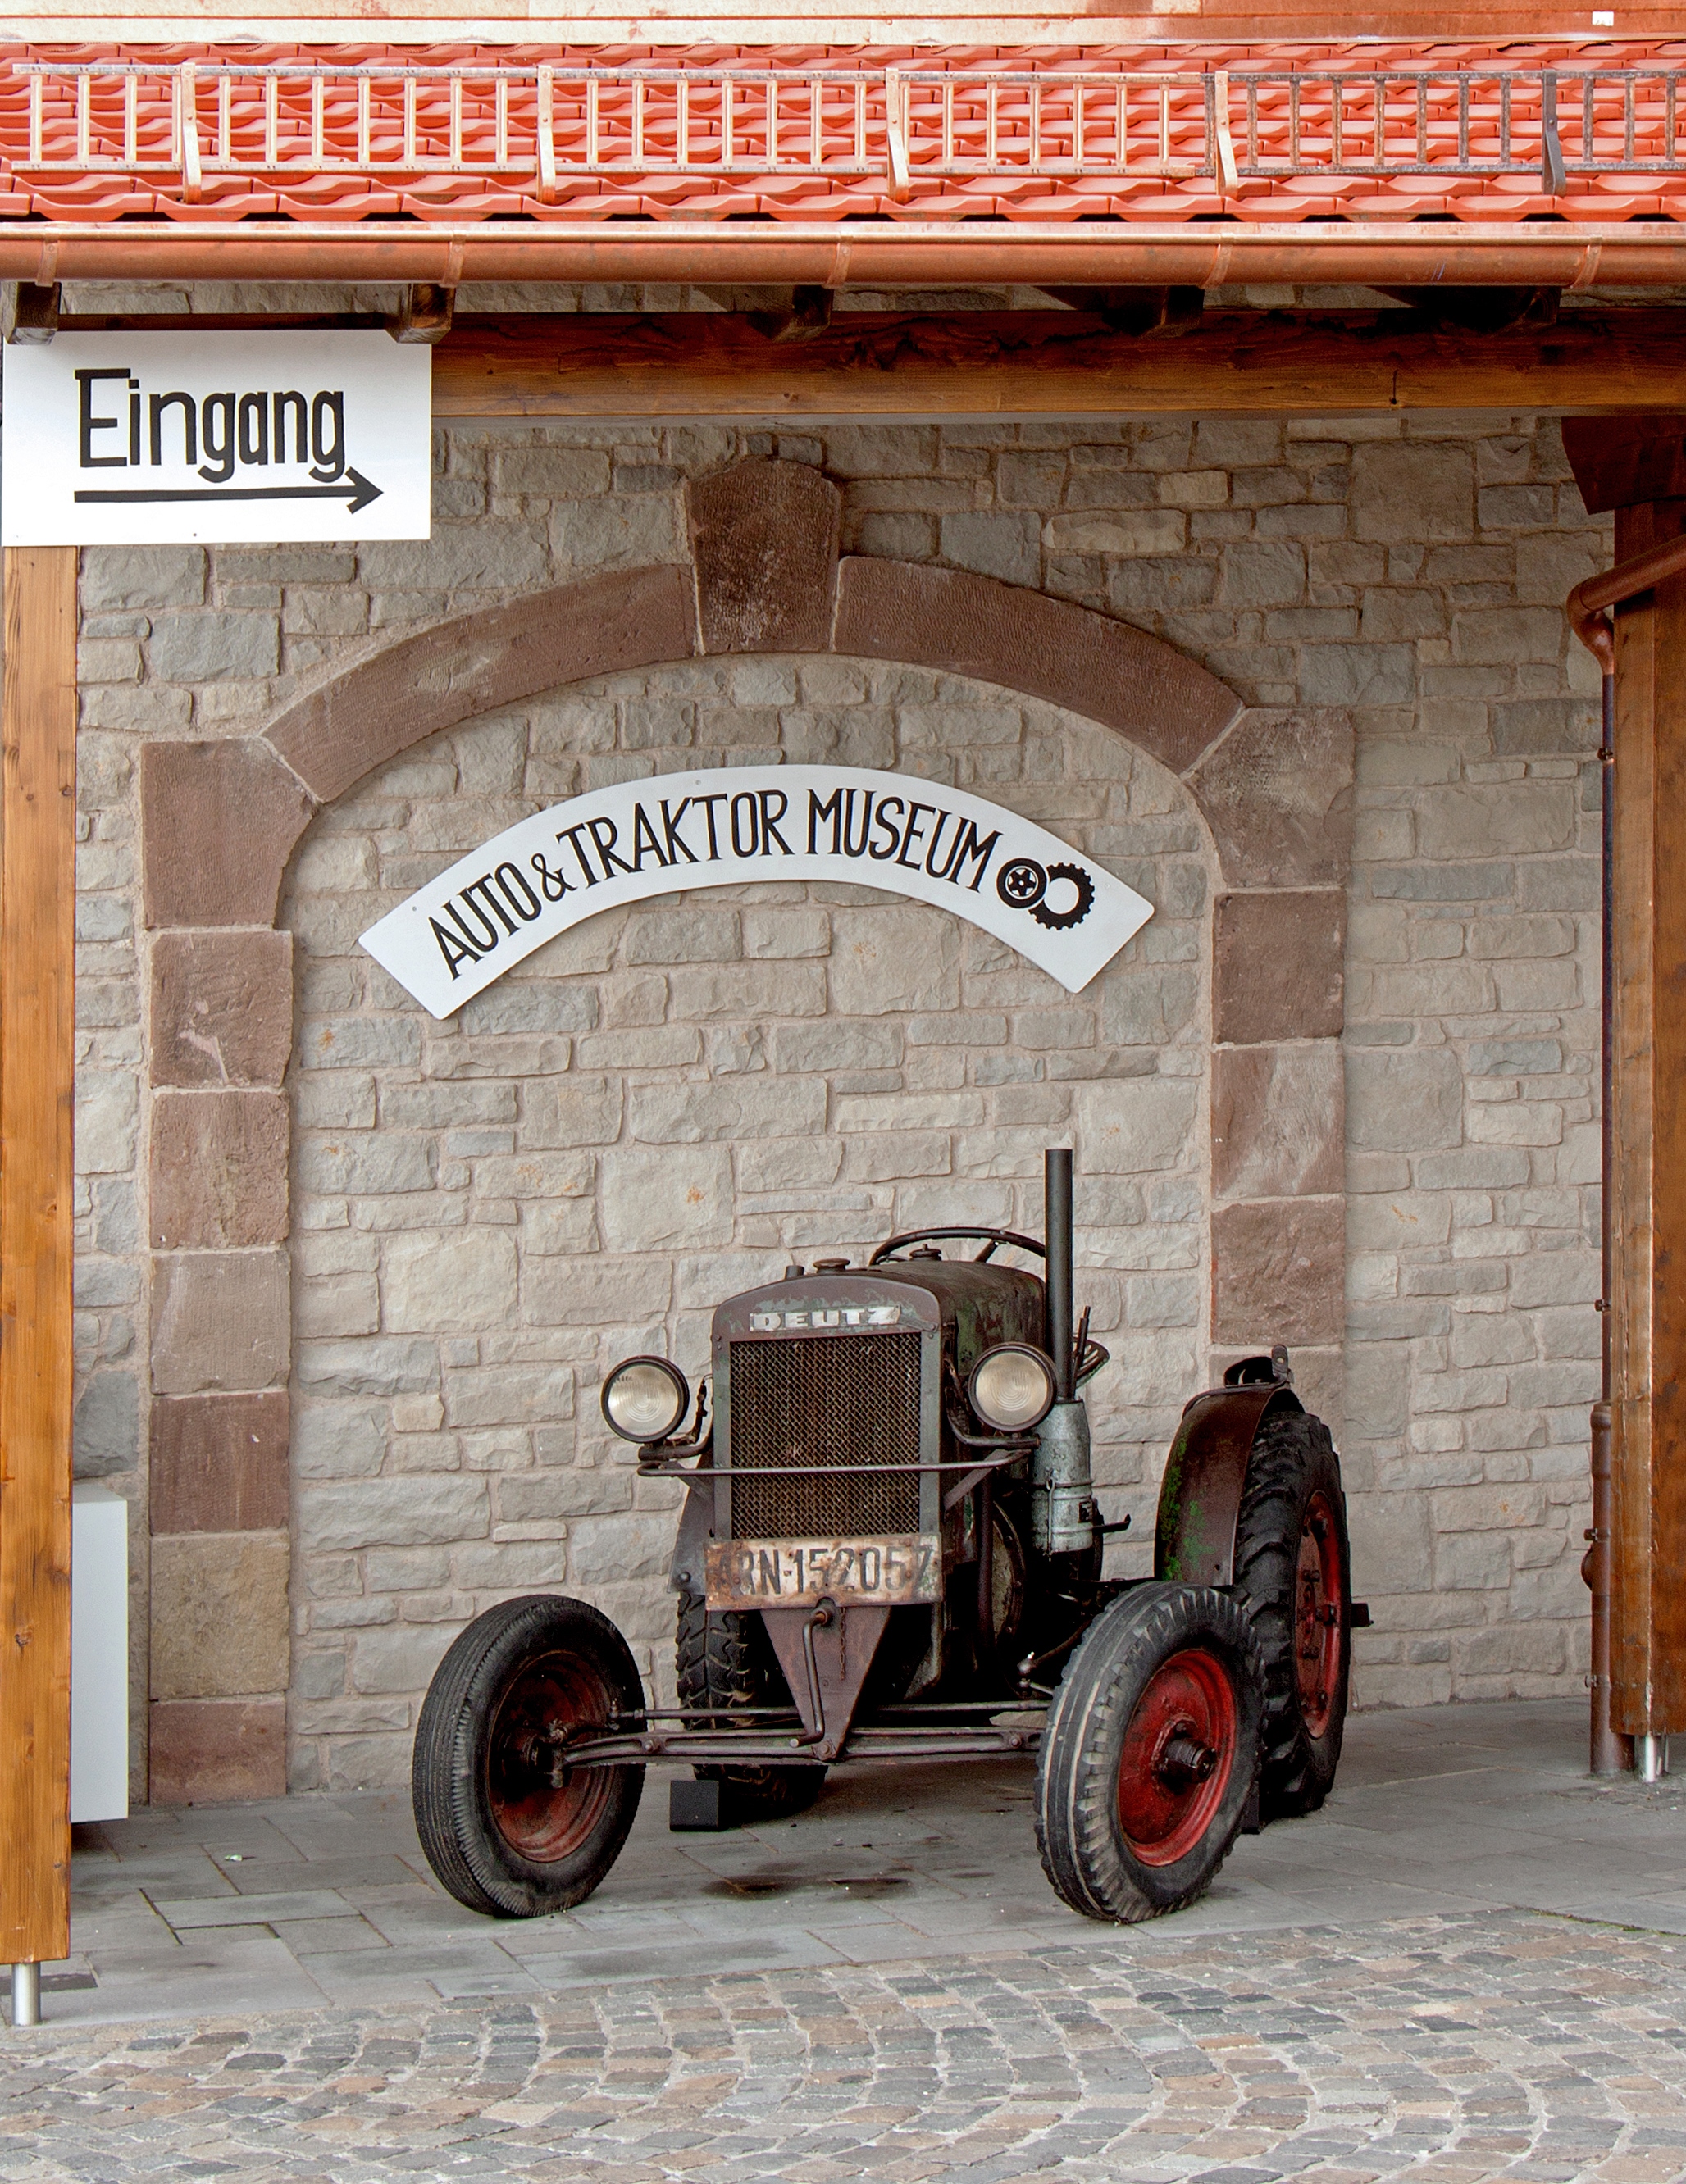 Traktormuseum Bodensee - Entrance area